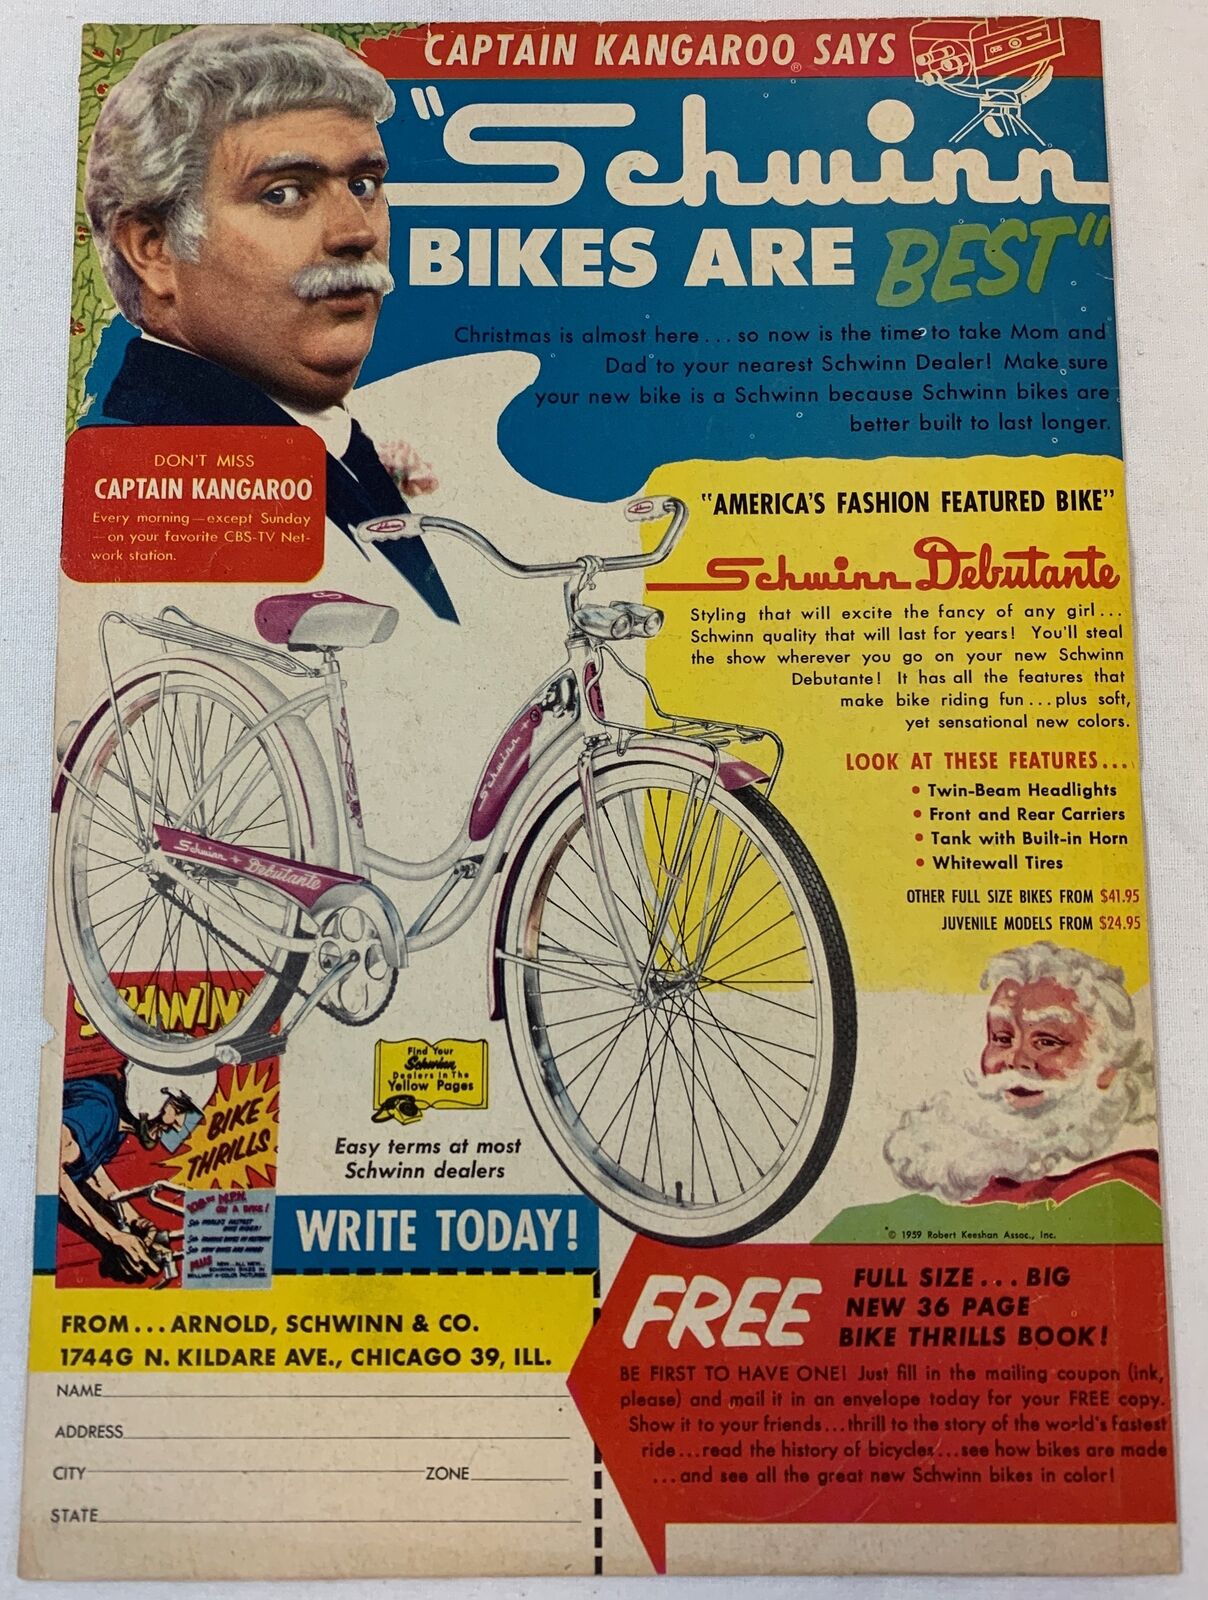 1959 CAPTAIN KANGAROO Schwinn Debutante bicycle ad page